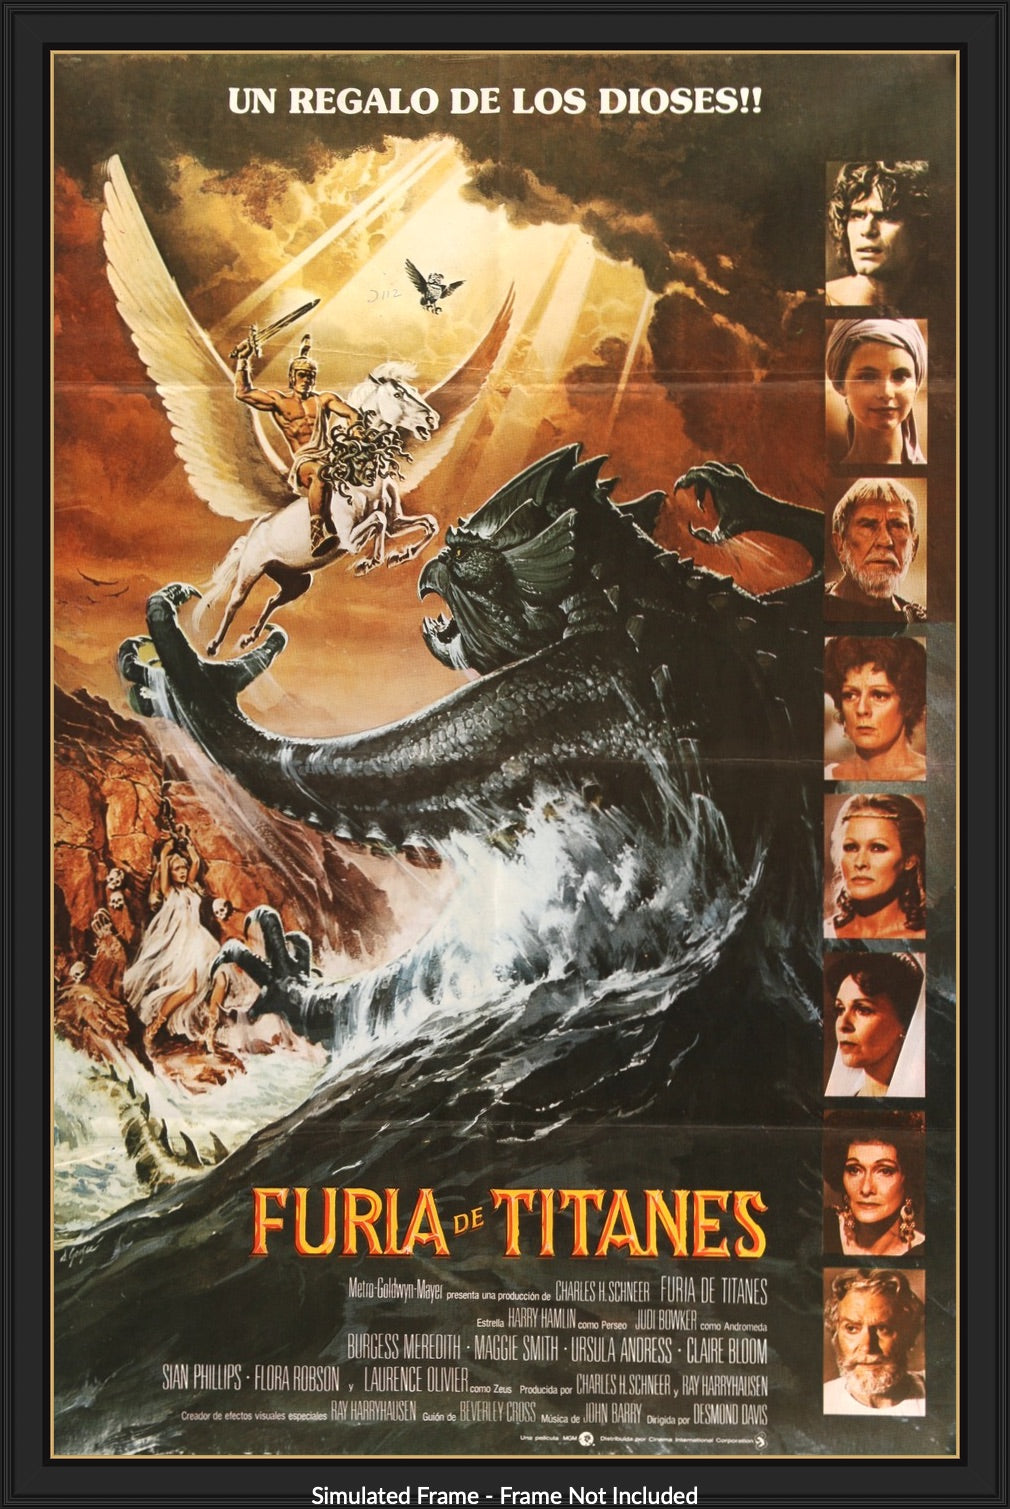 Clash of the Titans Original 1981 Japanese B2 Movie Poster